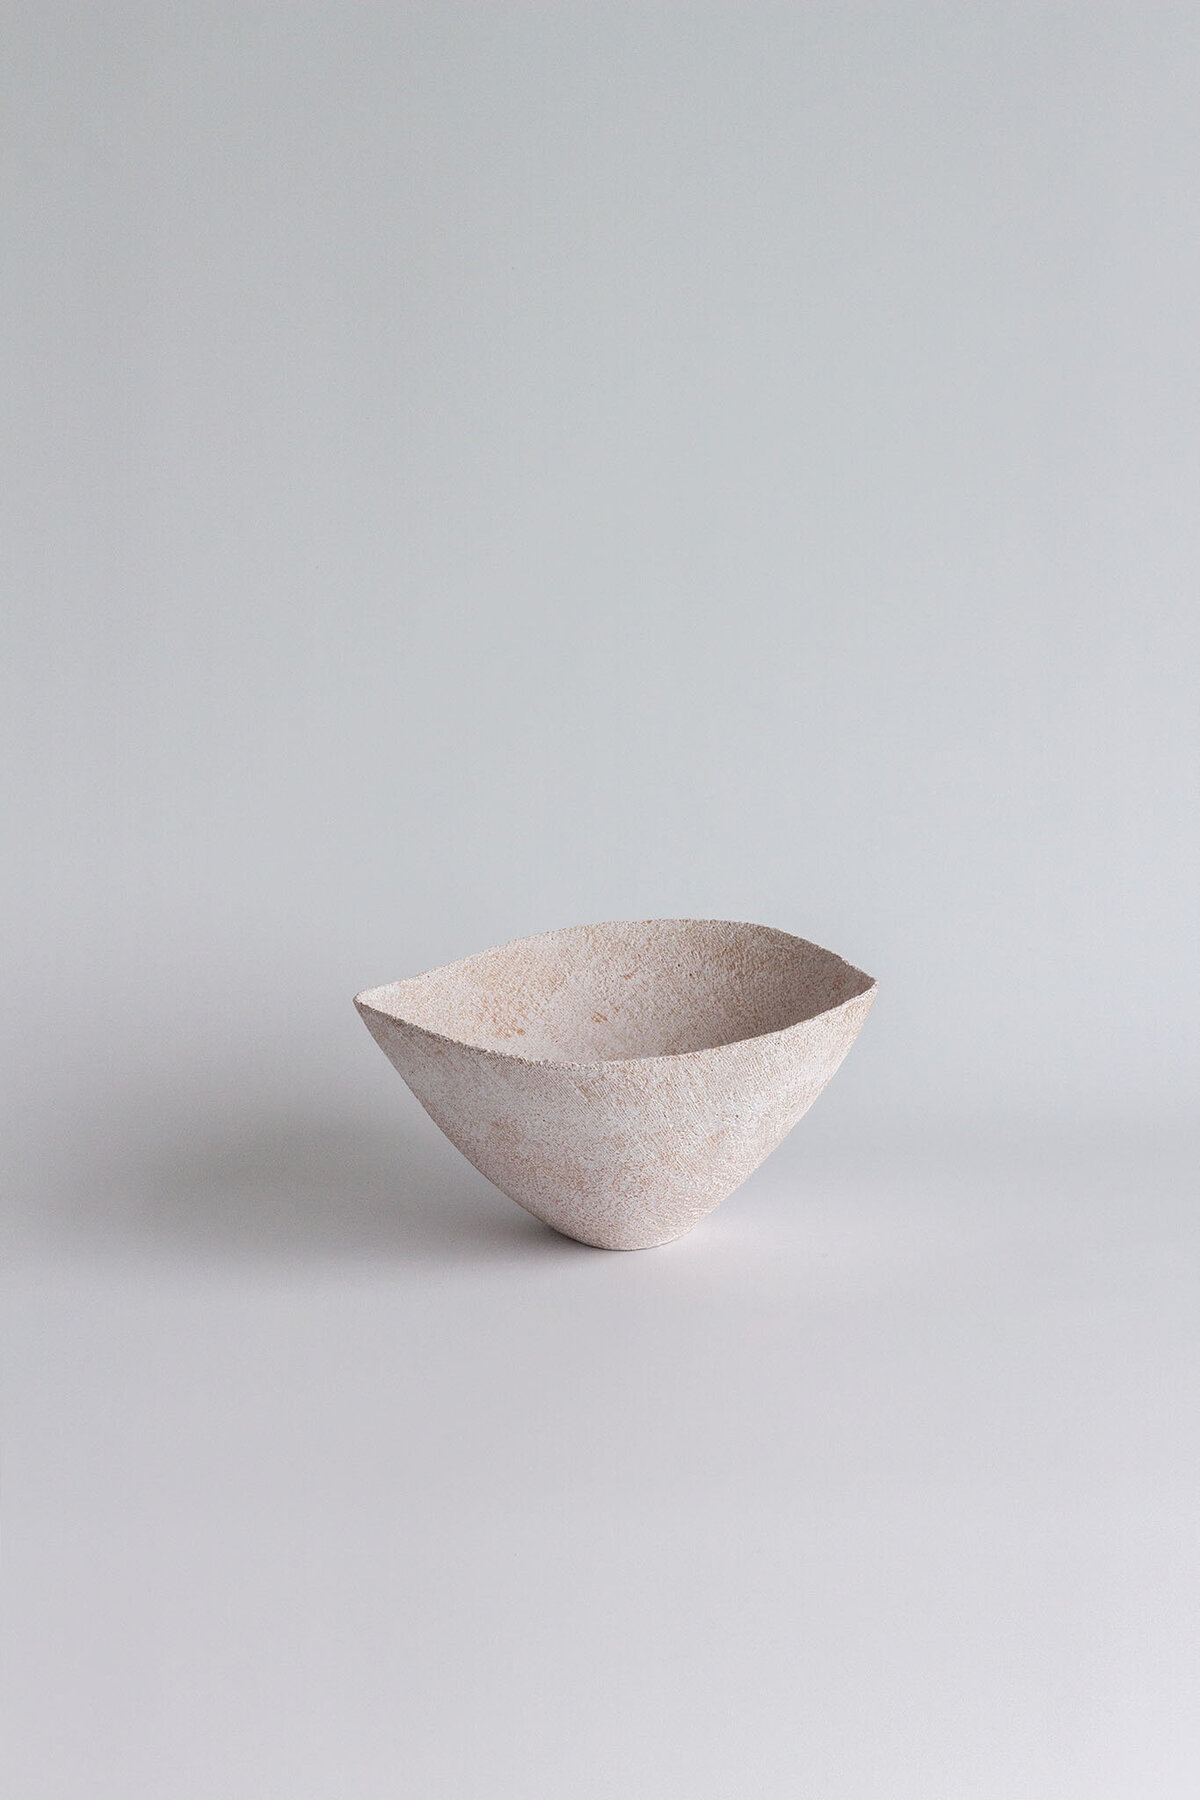 YashaButler-Ceramic-Lithic-Collection-Pergamon-No25-25-01-2022 (4)-2048px